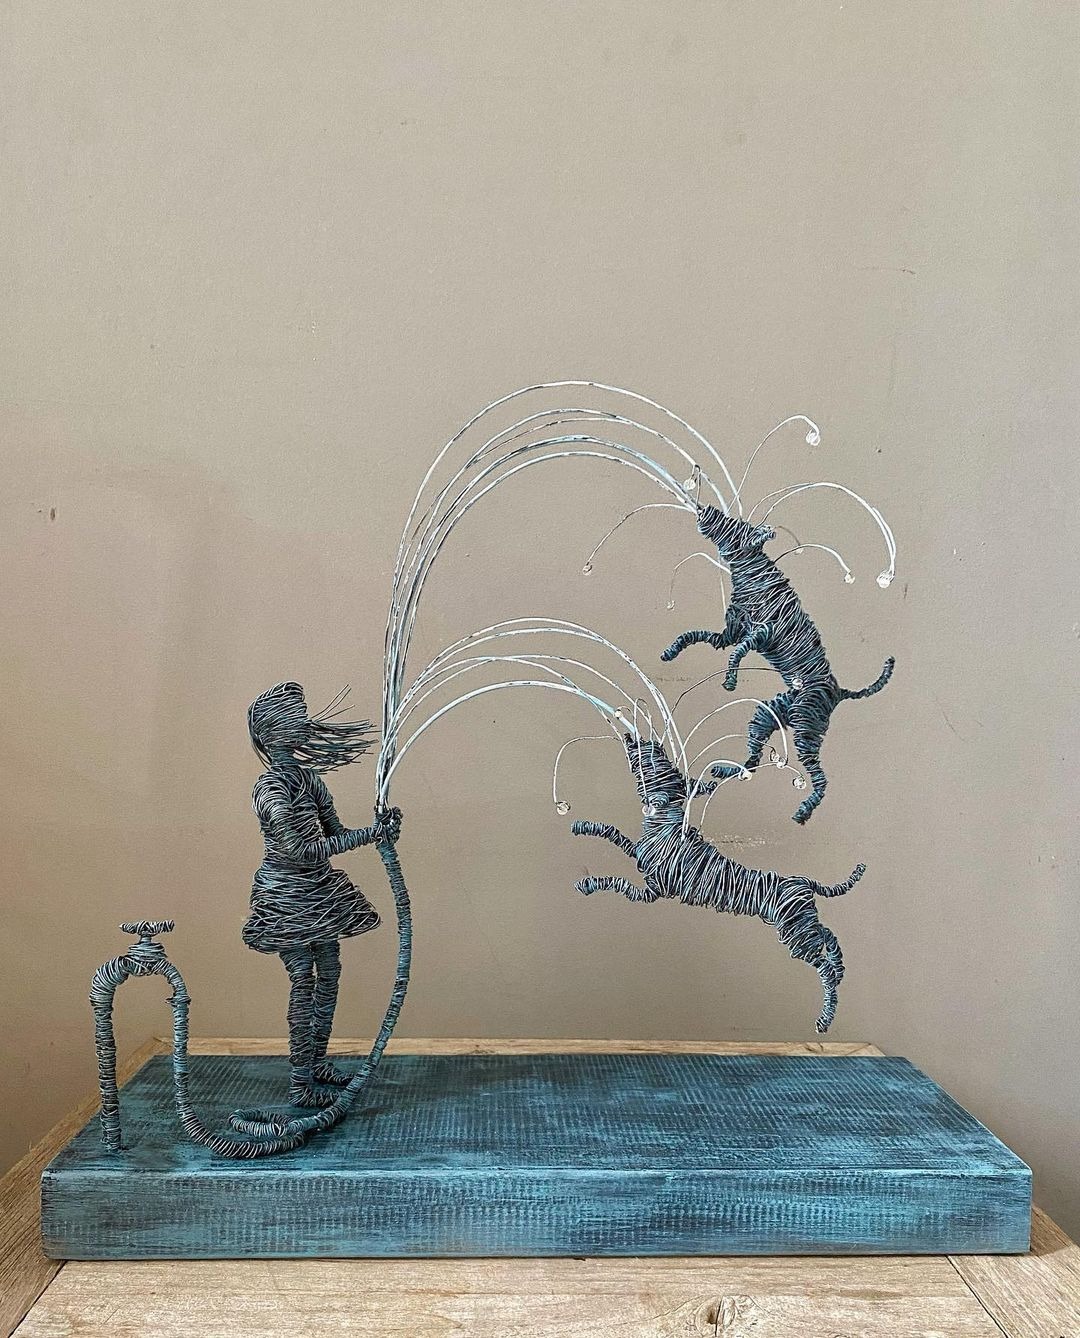 Wire sculptures by a Melbourne artist